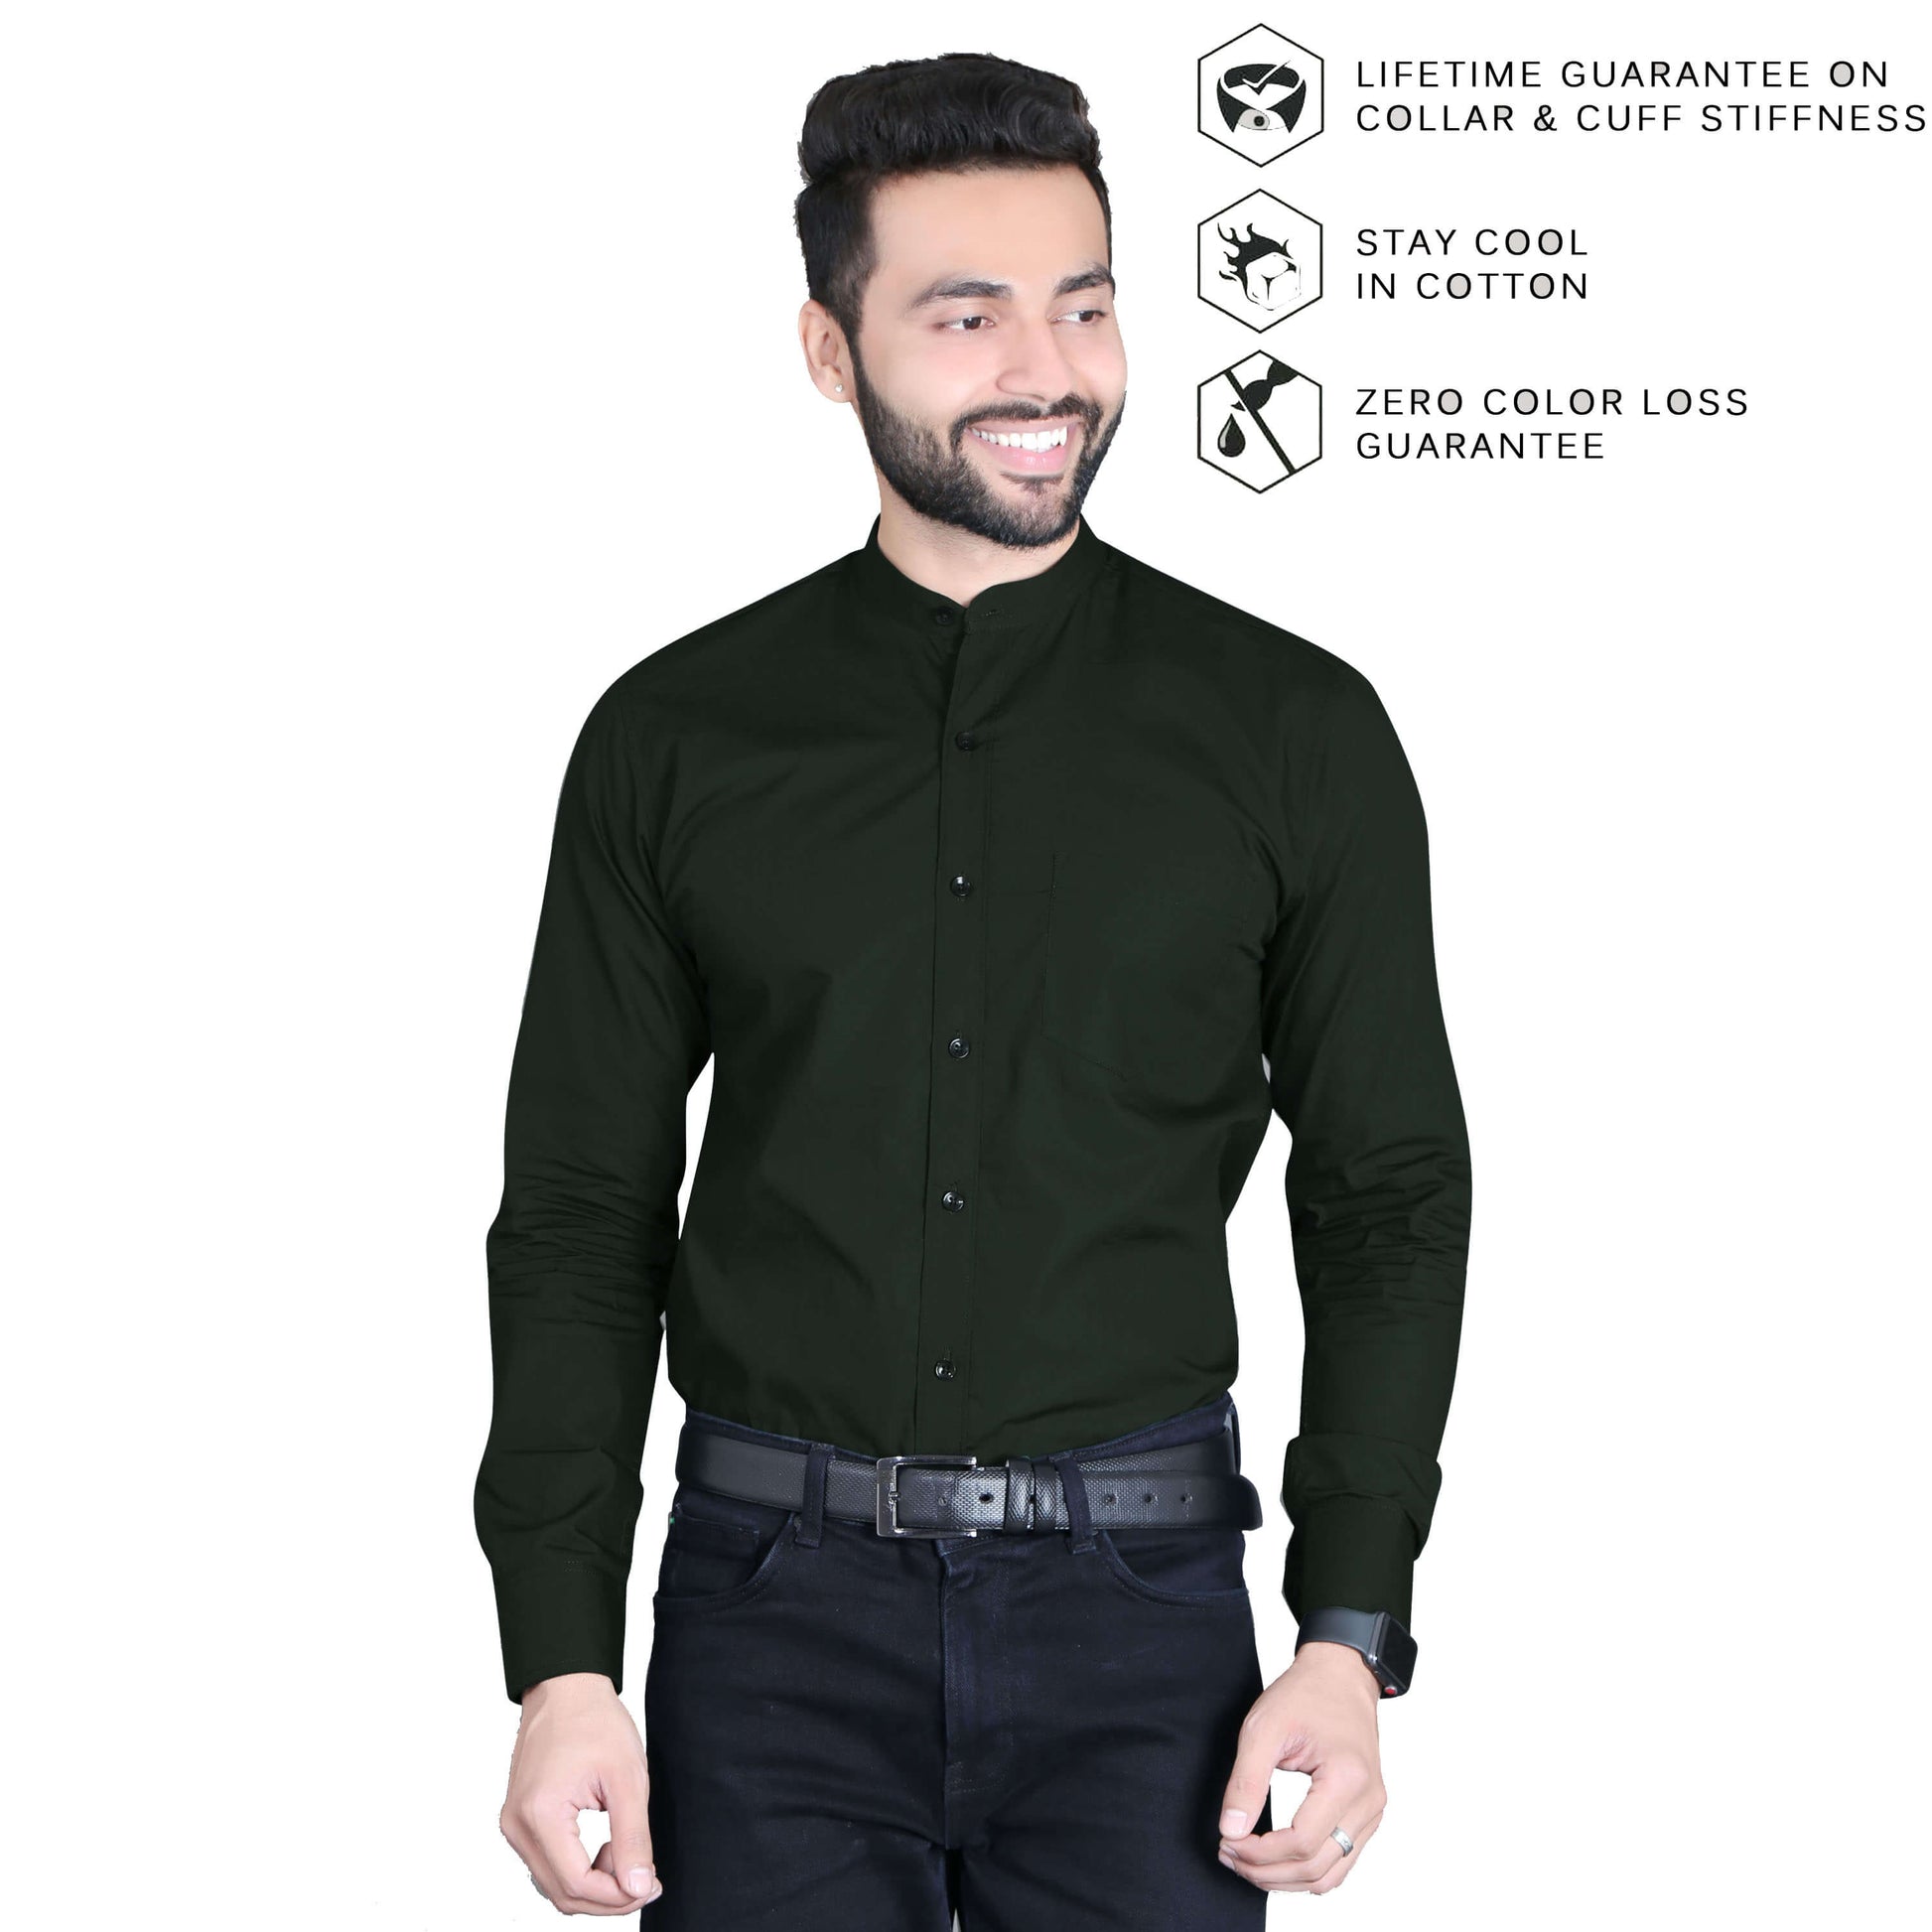 5thanfold Men's Formal Green Full Sleeve Pure Cotton Mandarin Collar Shirt (No Pocket)